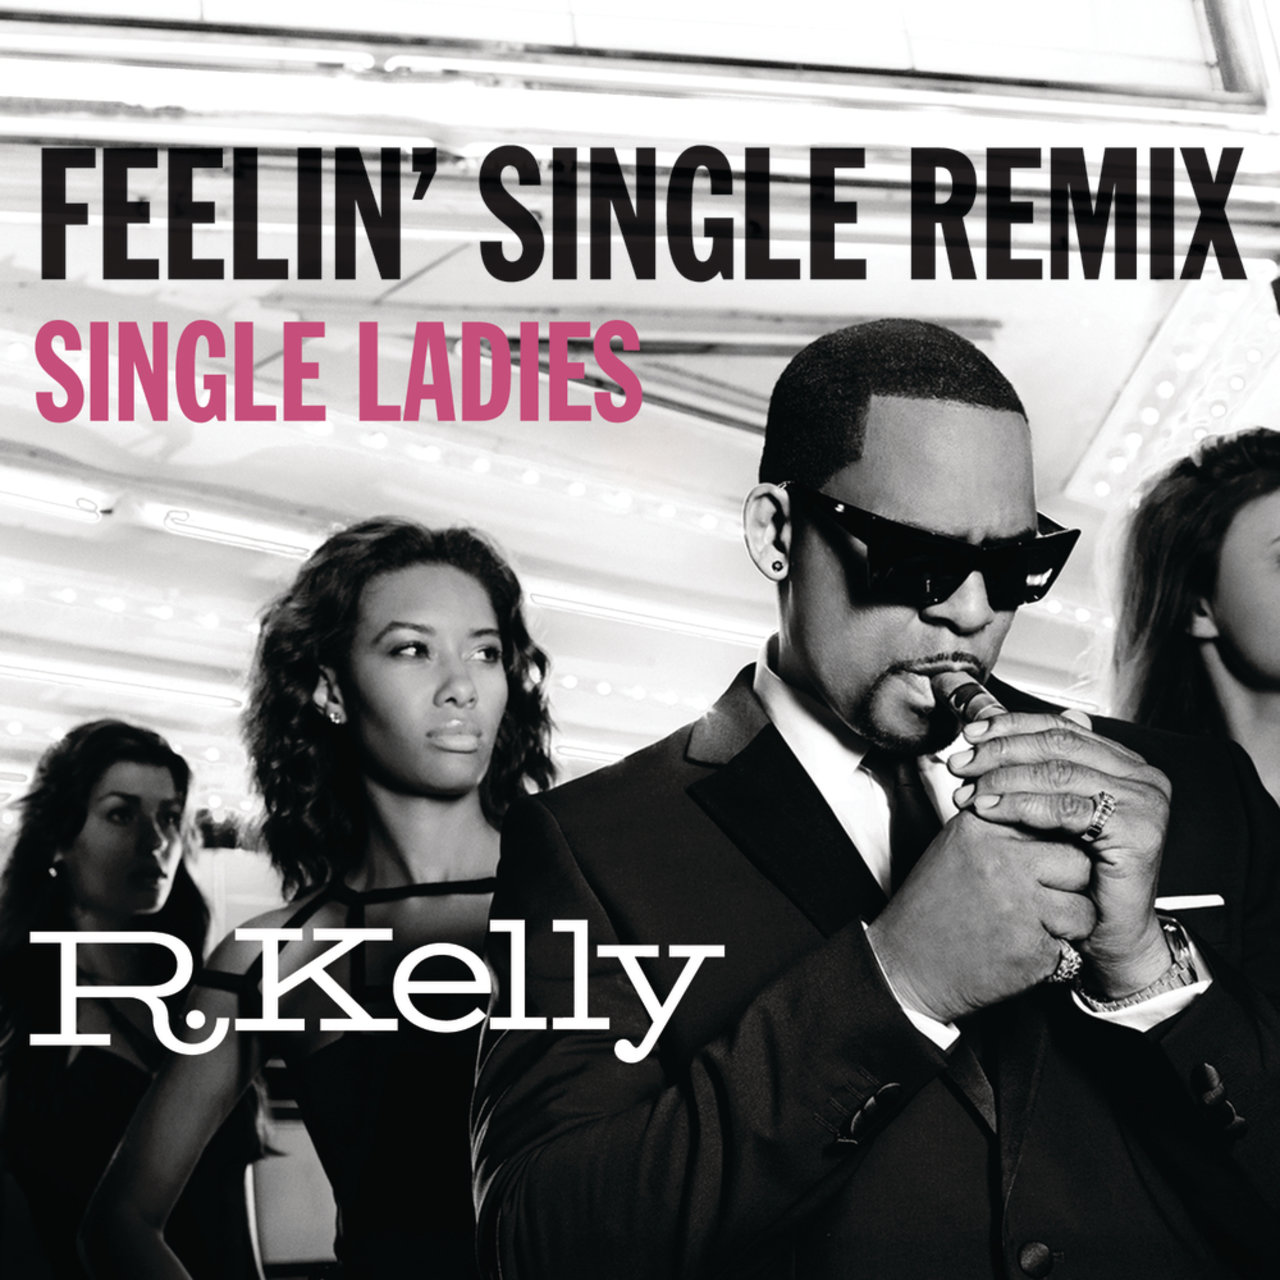 R. Kelly - Feelin' Single (Remix - Single Ladies) (Cover)